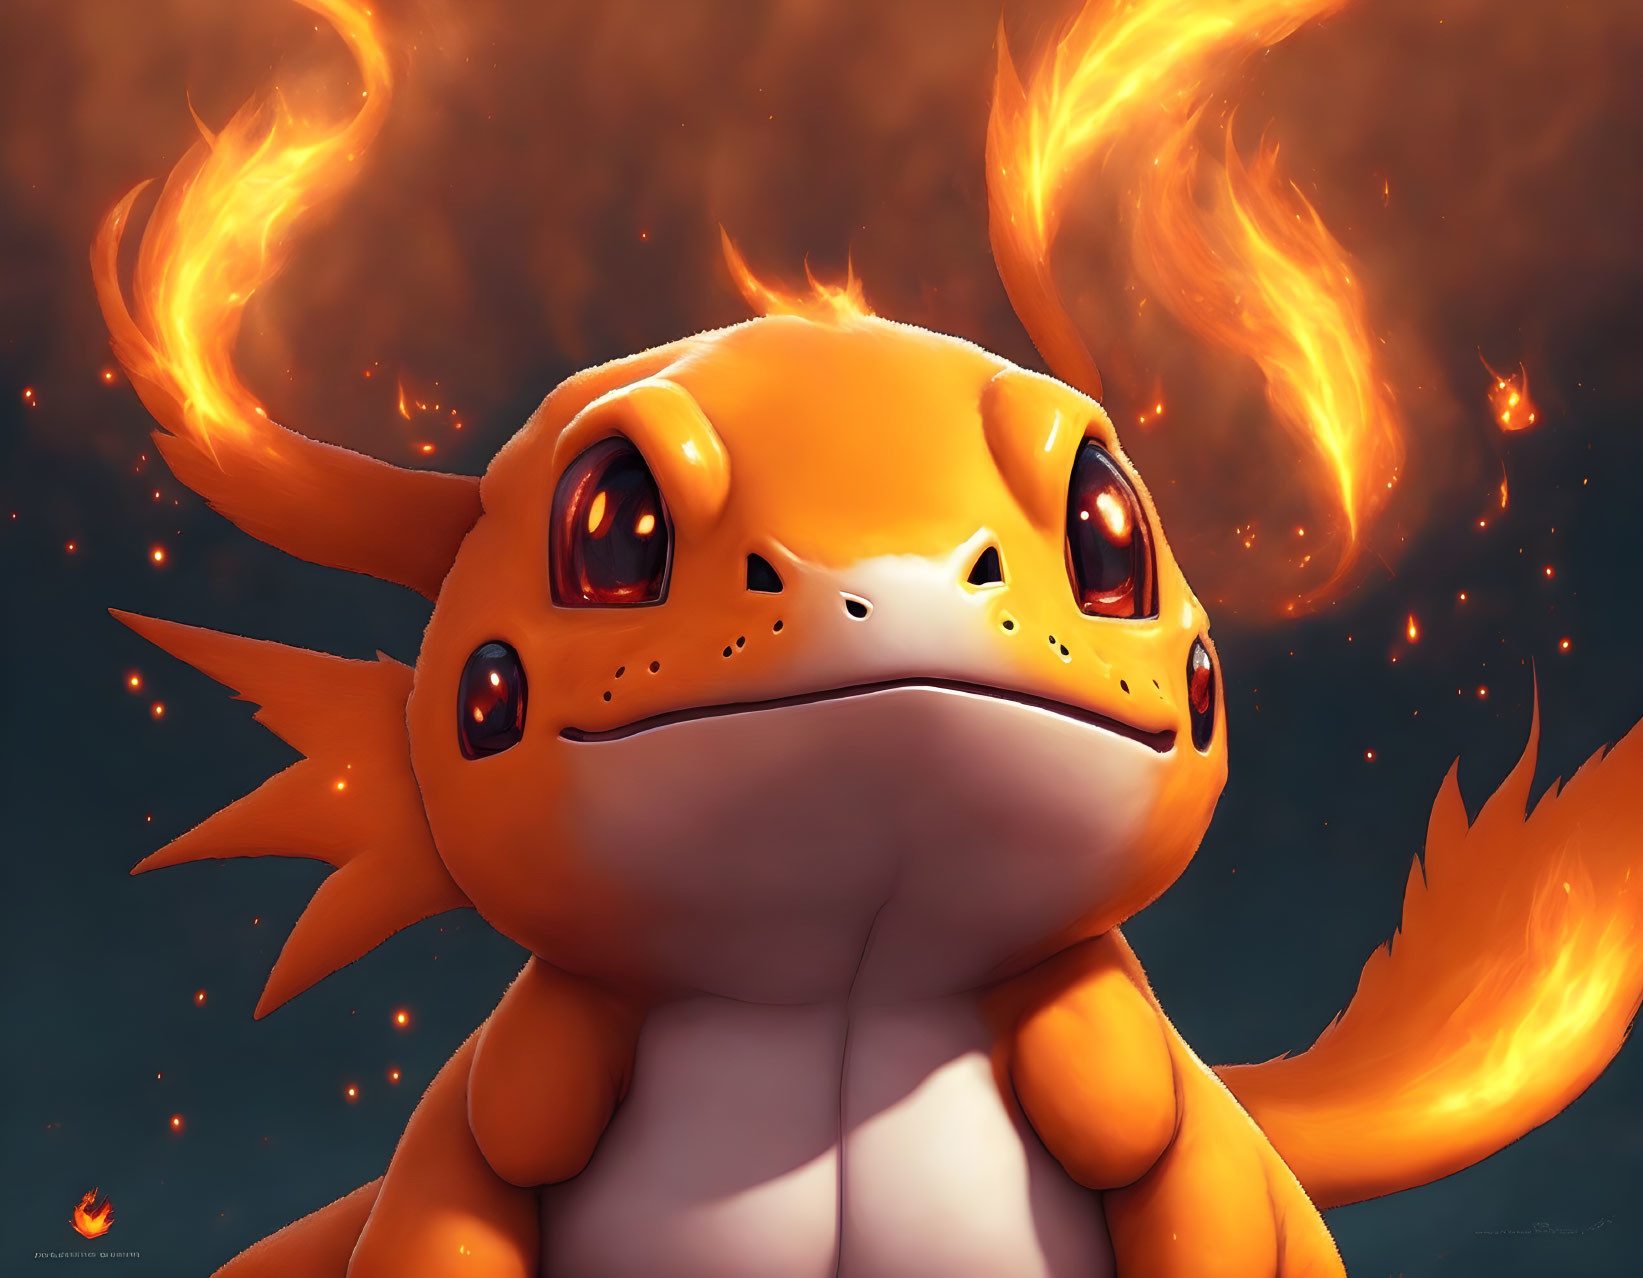 Orange Fire-Type Pokémon Charmander Close-Up on Fiery Background